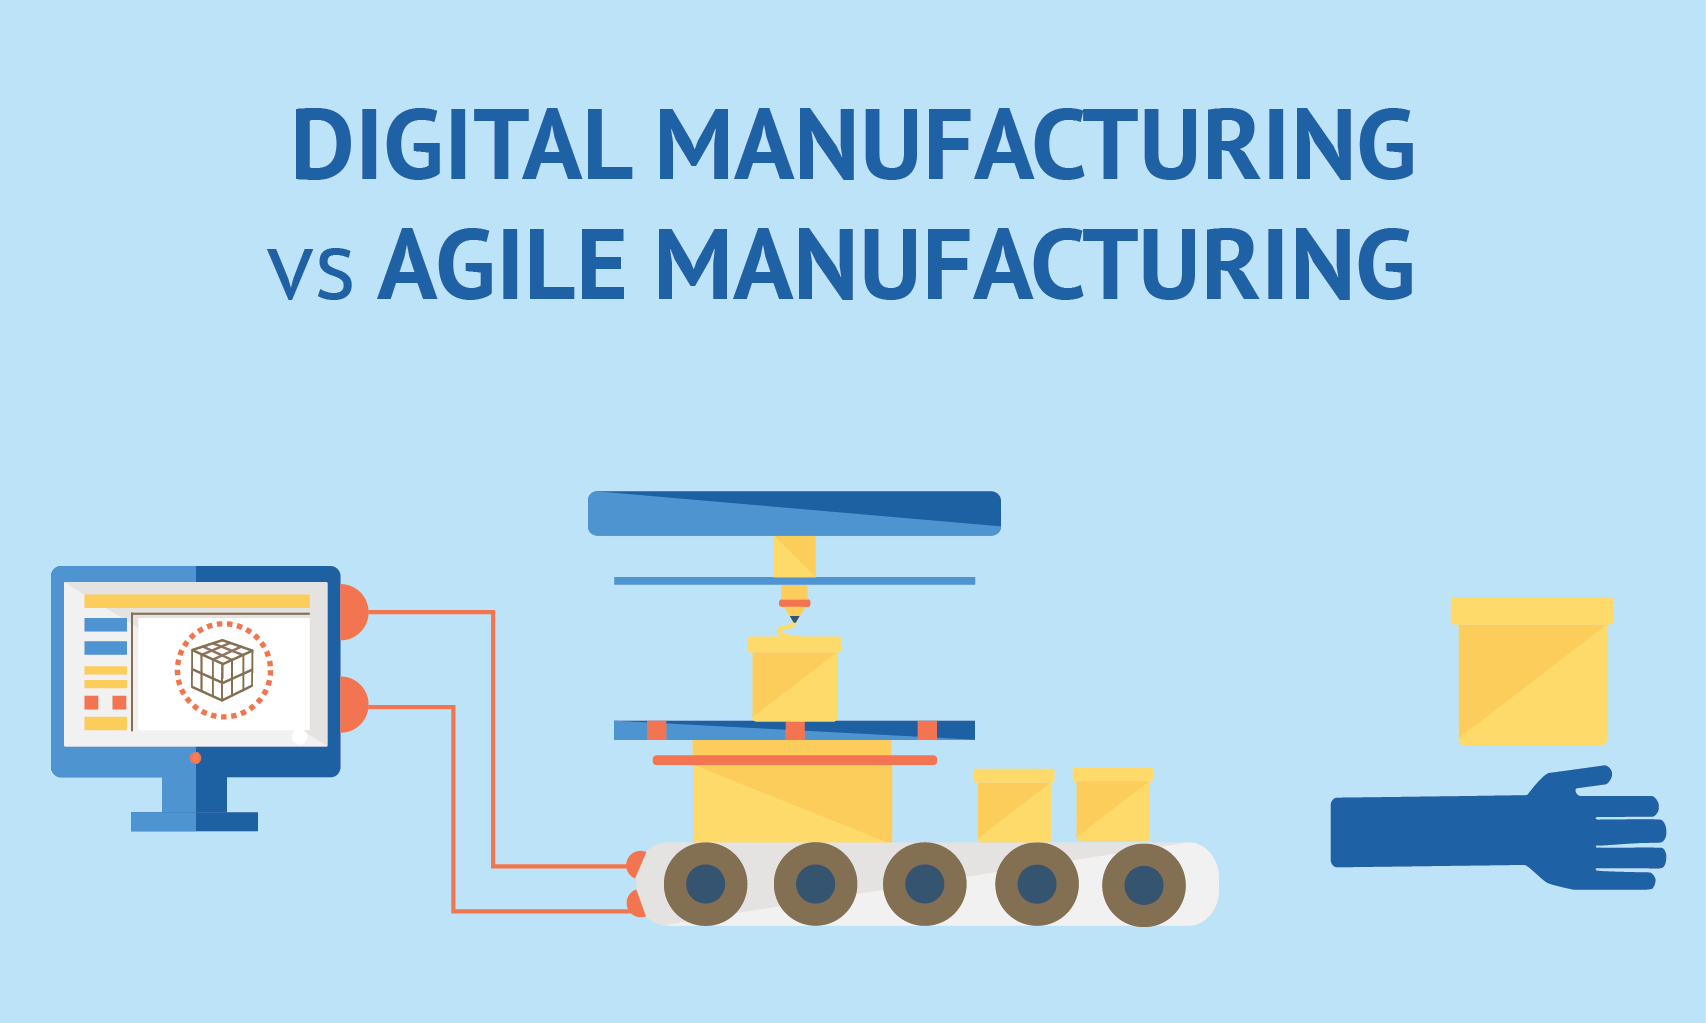 Digital Manufacturing or Agile Manufacturing?